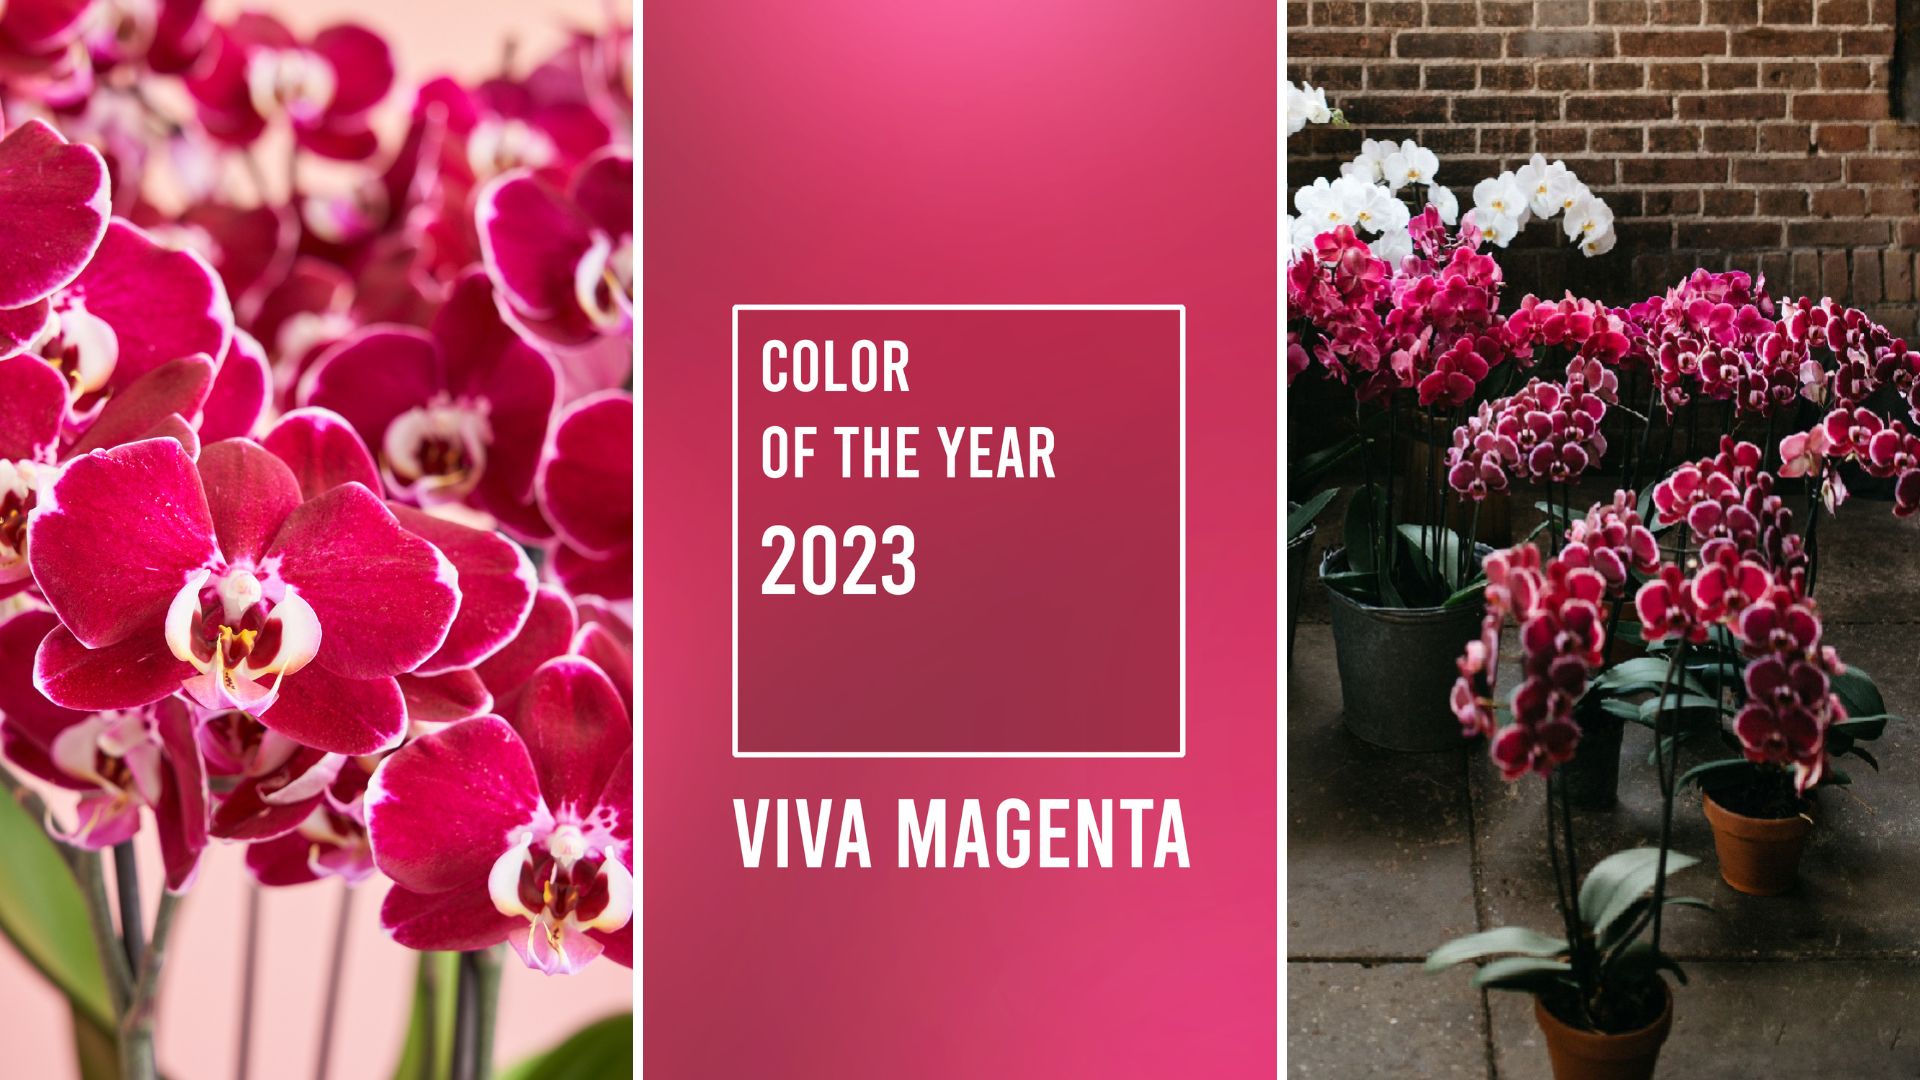 Pantone color of the year Viva Magenta